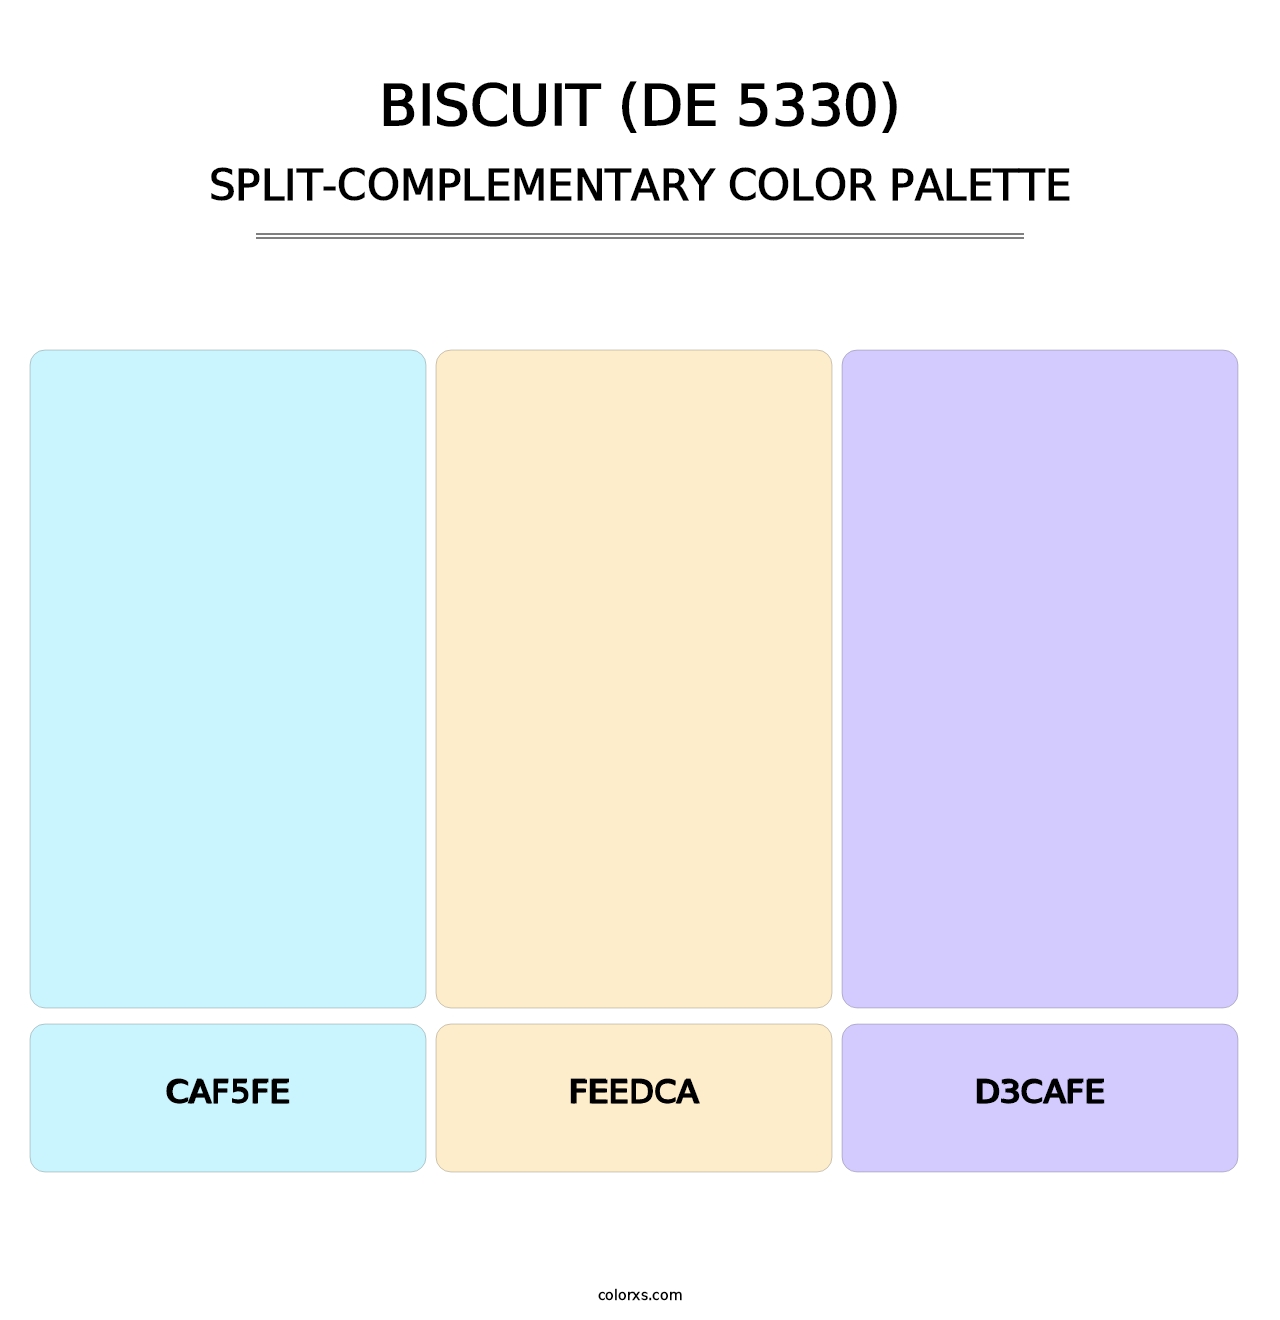 Biscuit (DE 5330) - Split-Complementary Color Palette